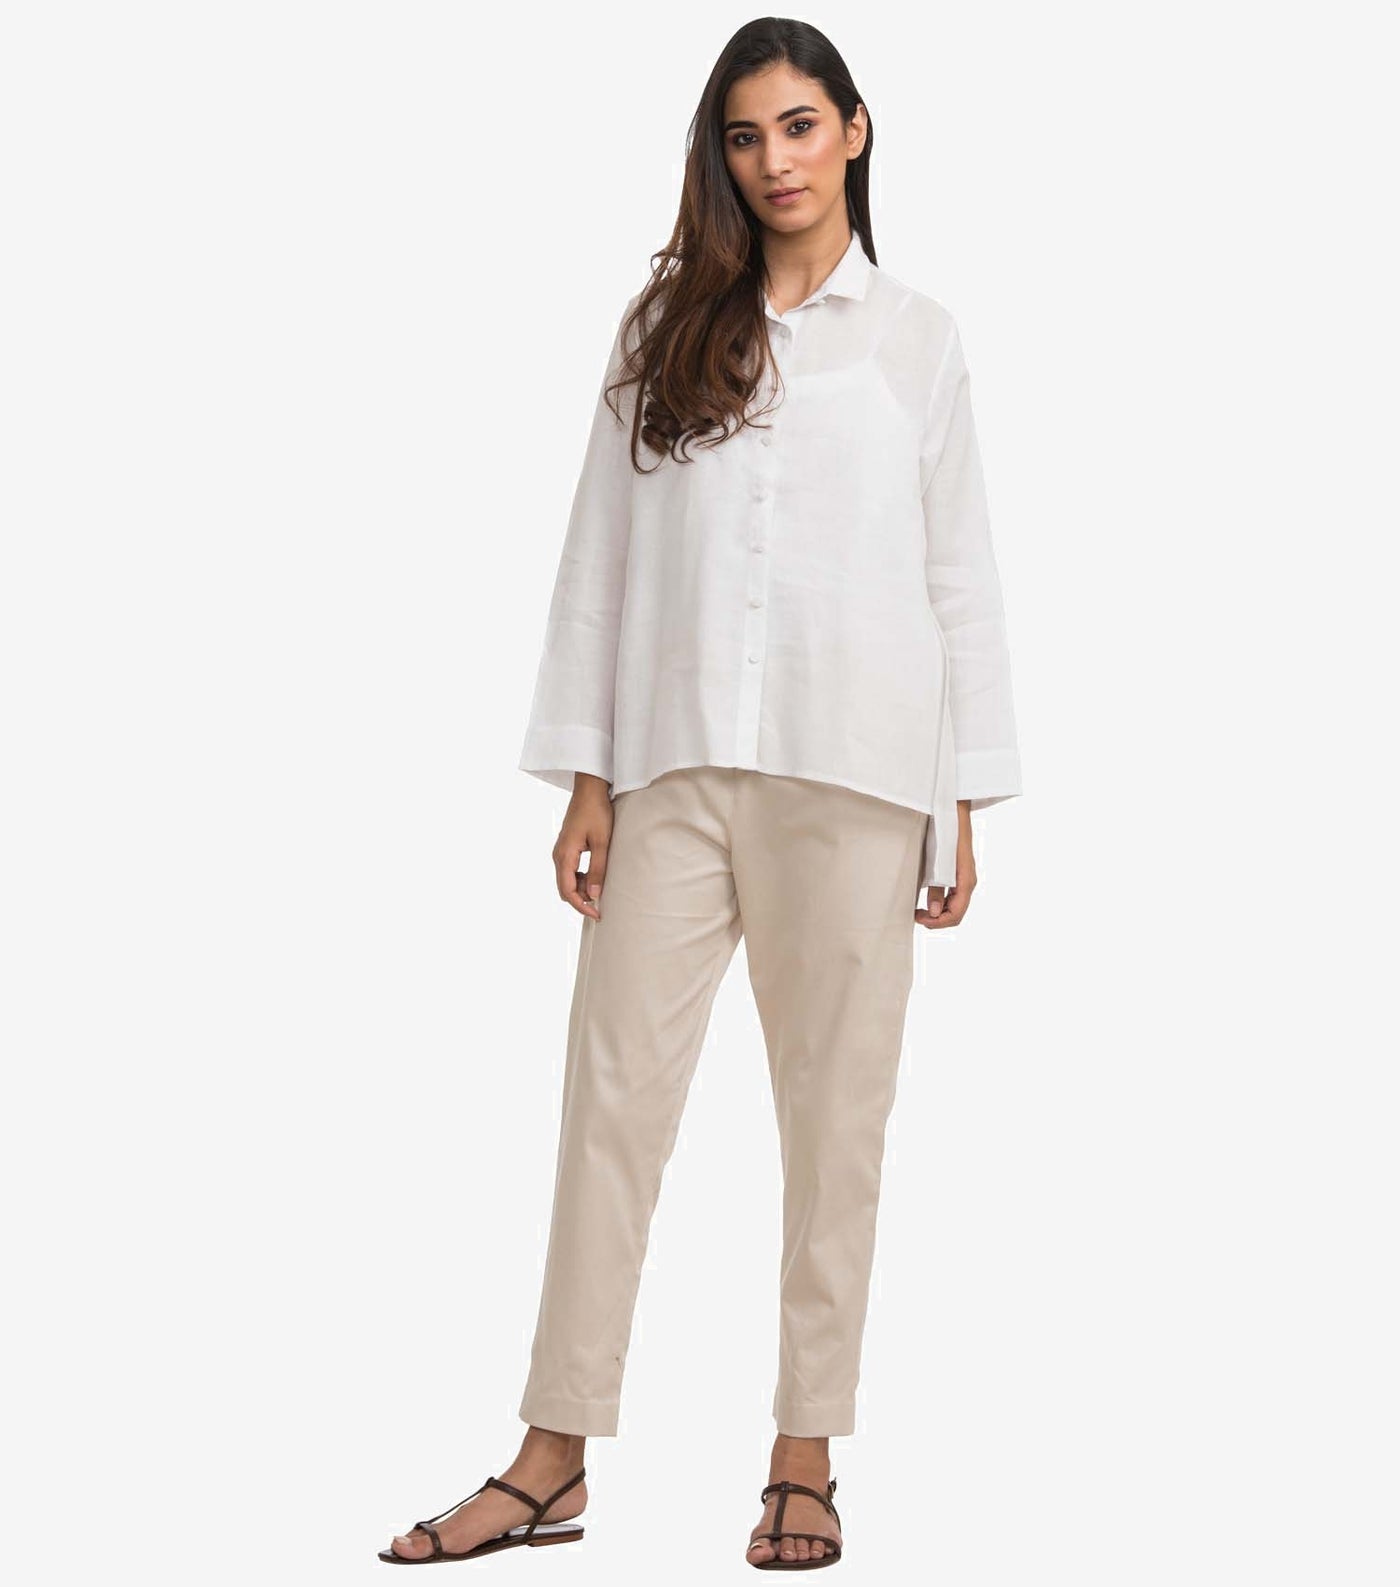 White linen solid shirt